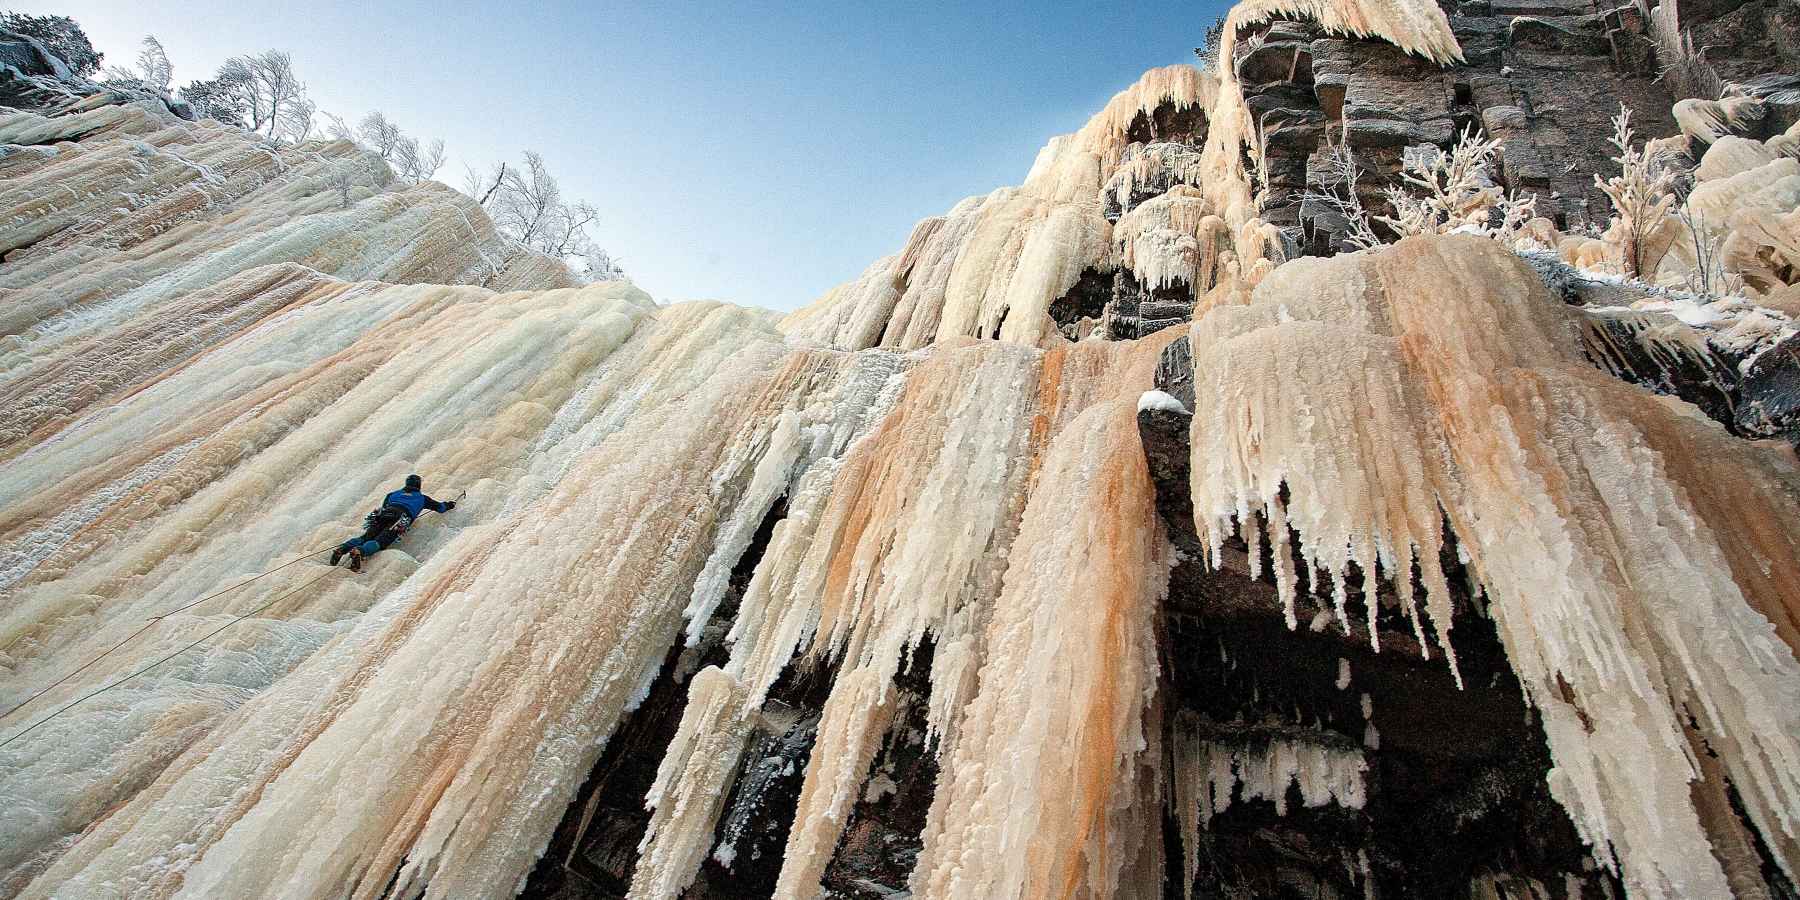 A man climbs a frozen waterfall in Finland's Korouma Canyon.